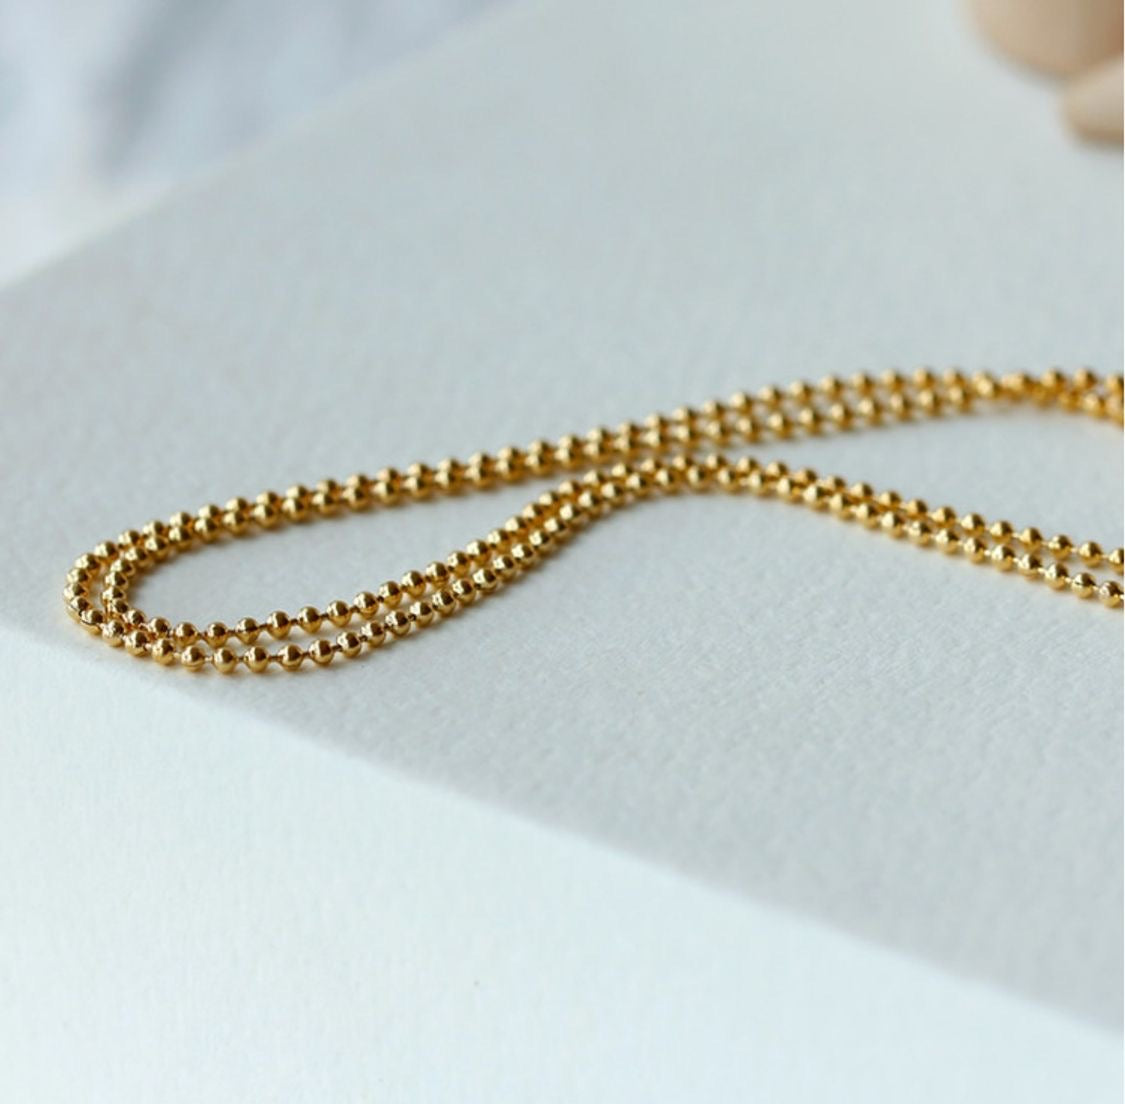 Delicate necklace "DotDotDot" with 18K gold plating